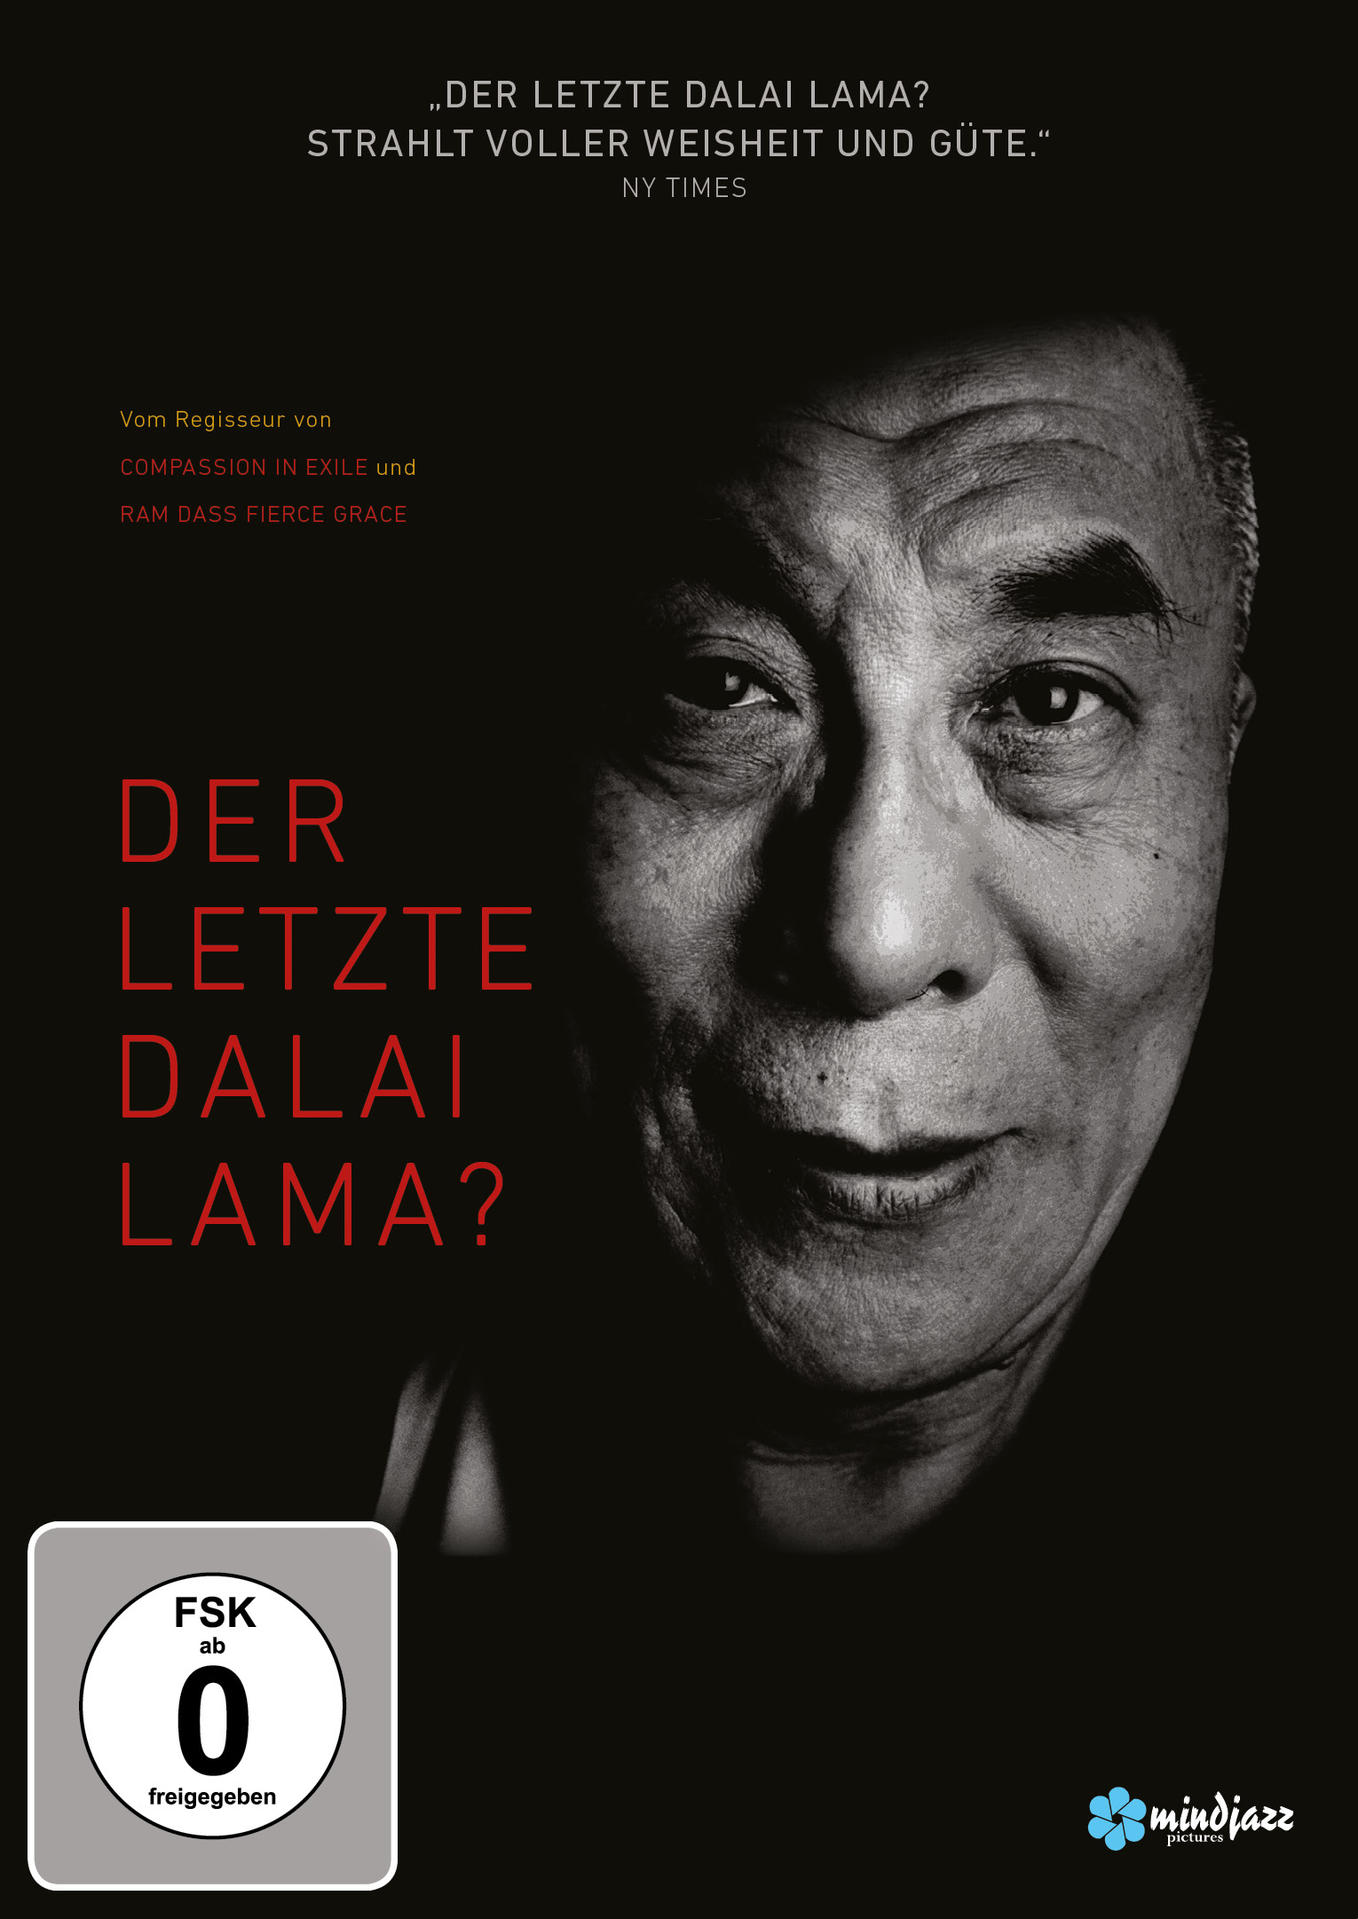 Der (DVD) letzte Lama? Dalai -